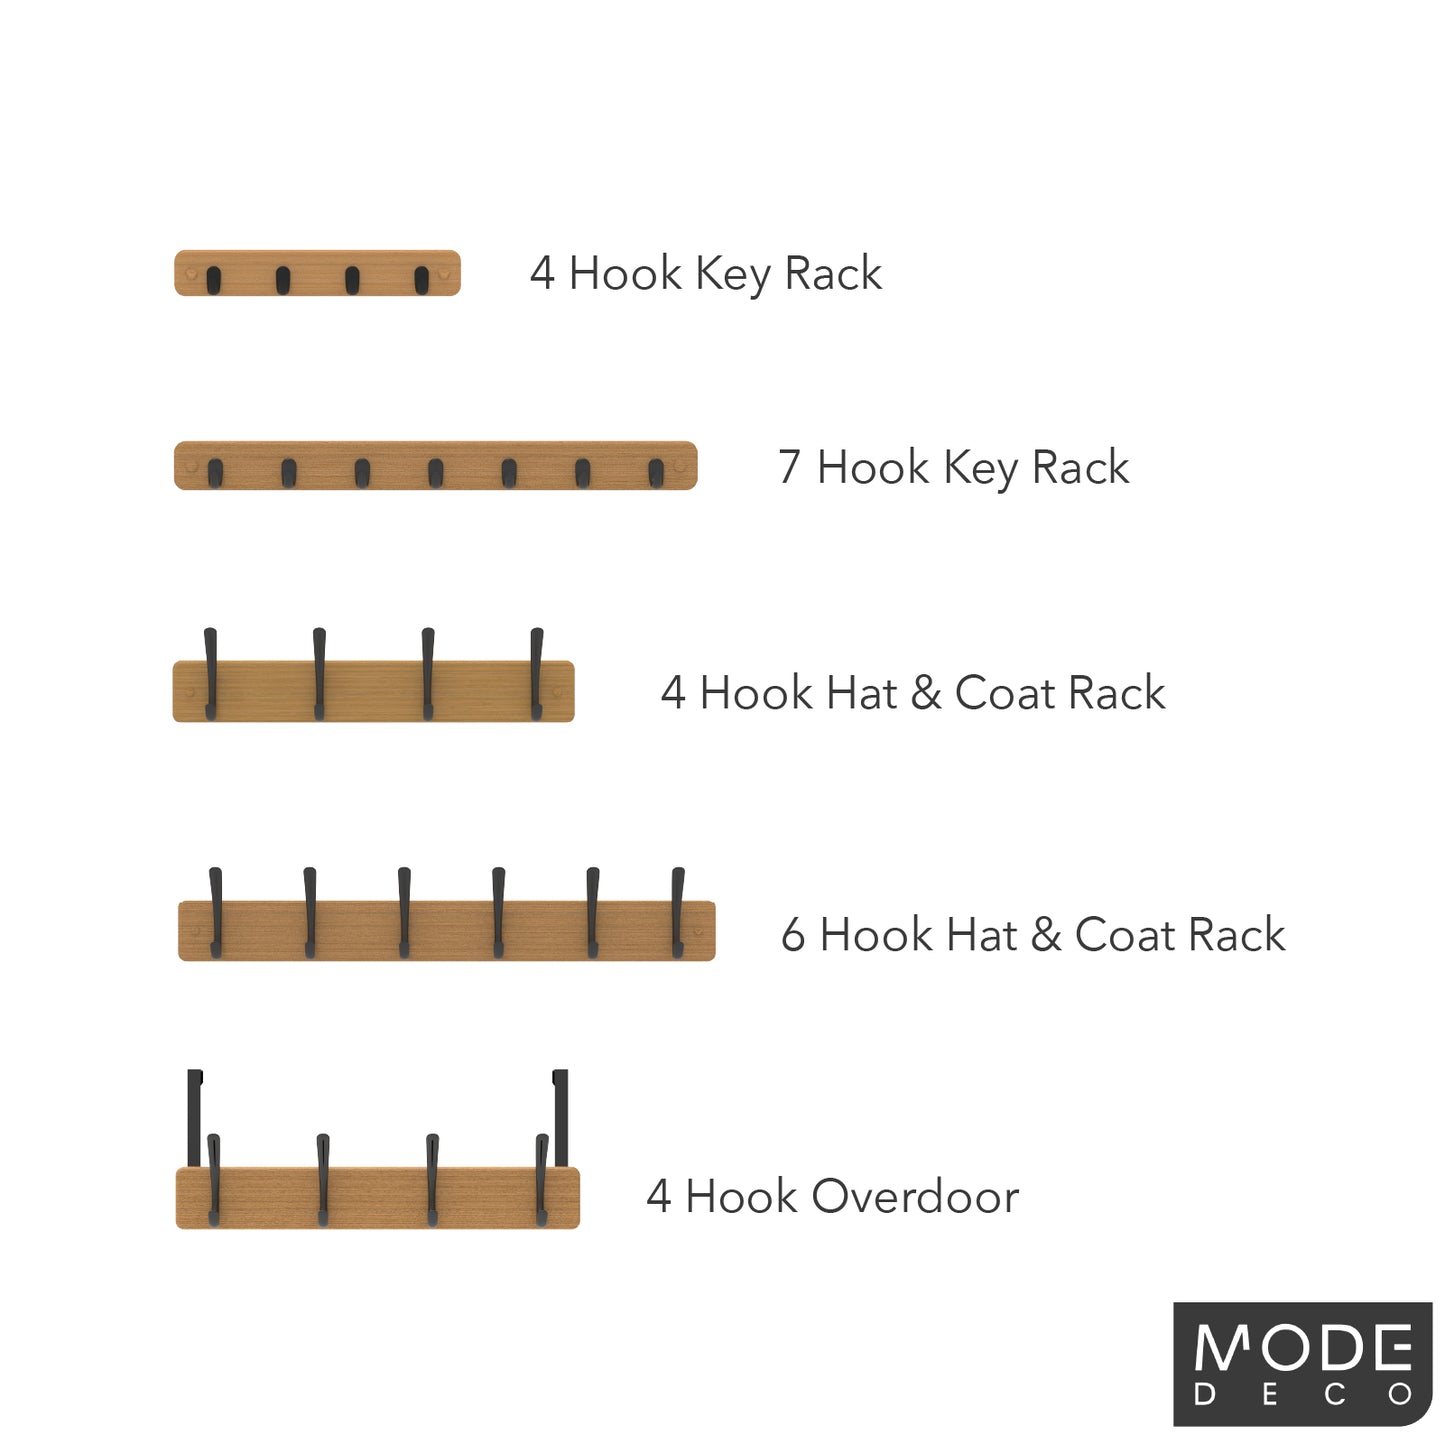 4 Black Hooks on Bamboo Board Over Door Hook